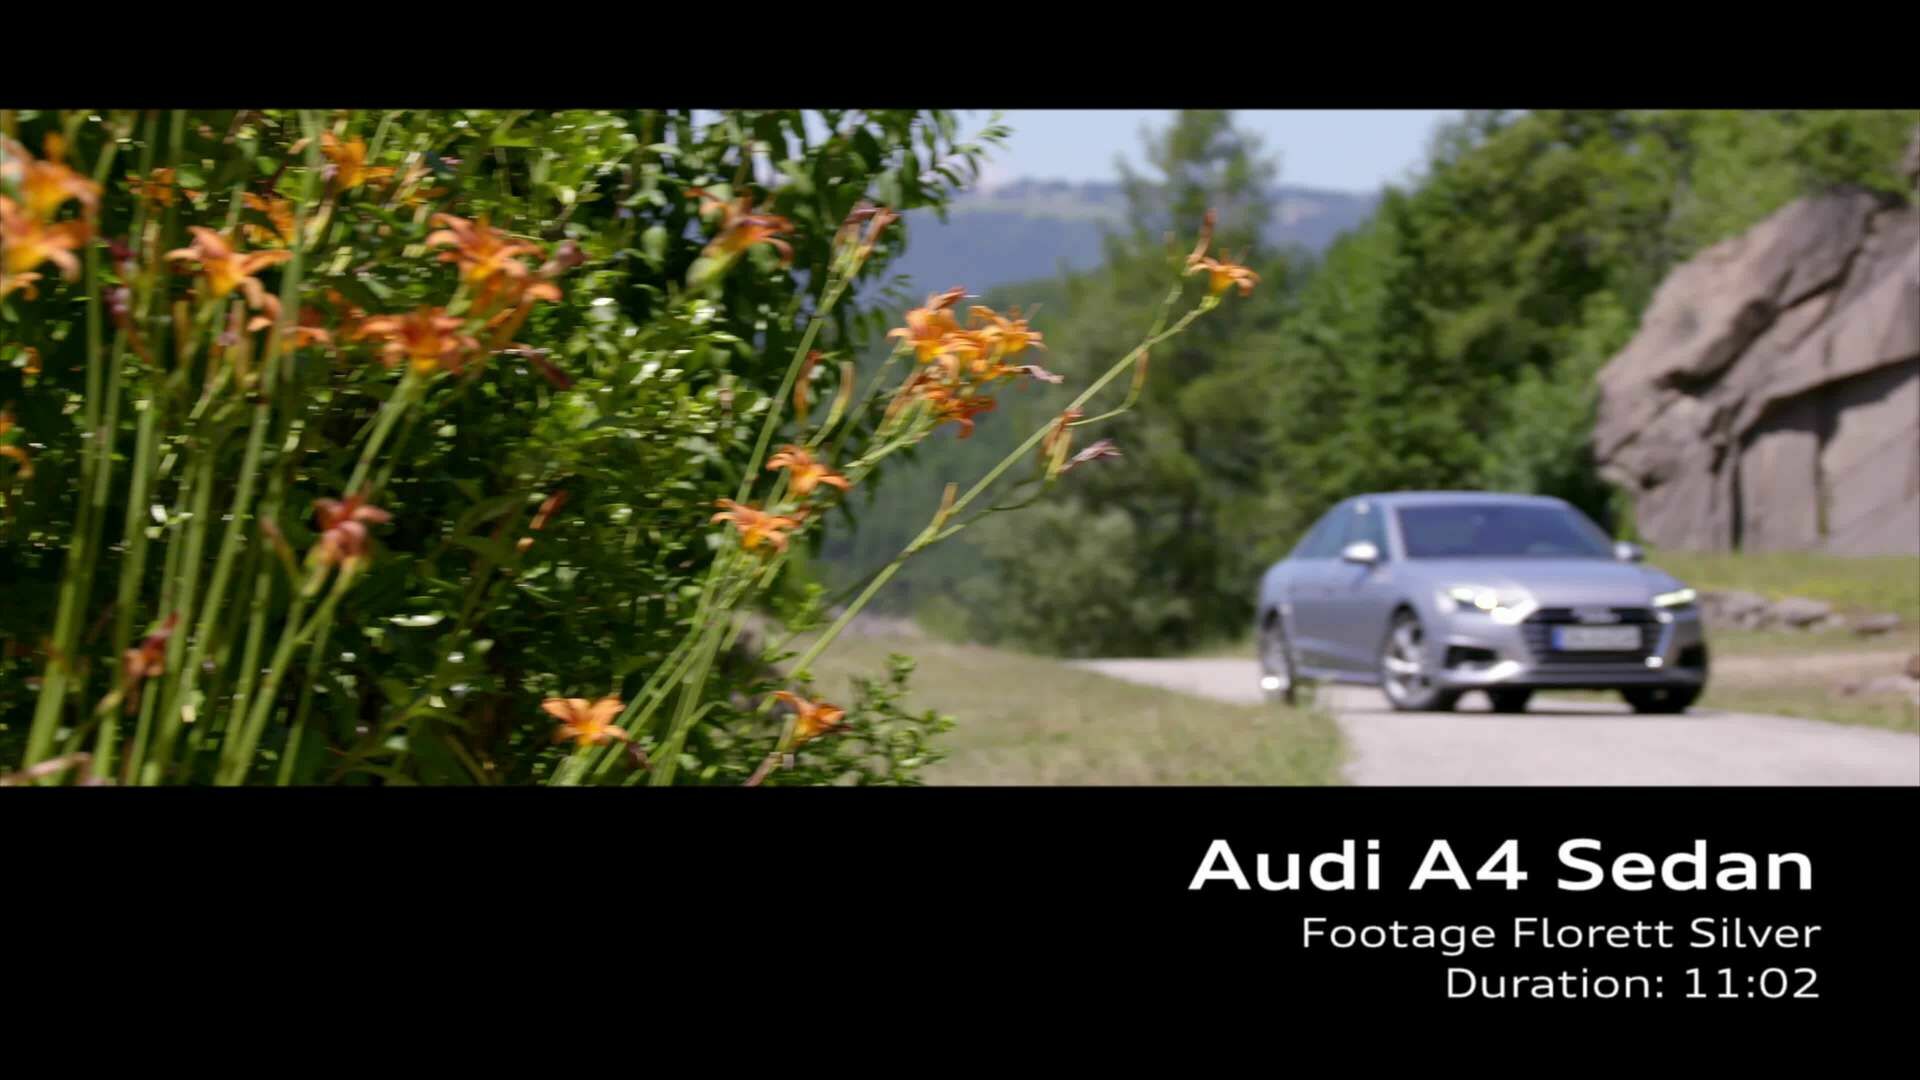 Audi A4 Limousine TFSI Florettsilber (Footage)